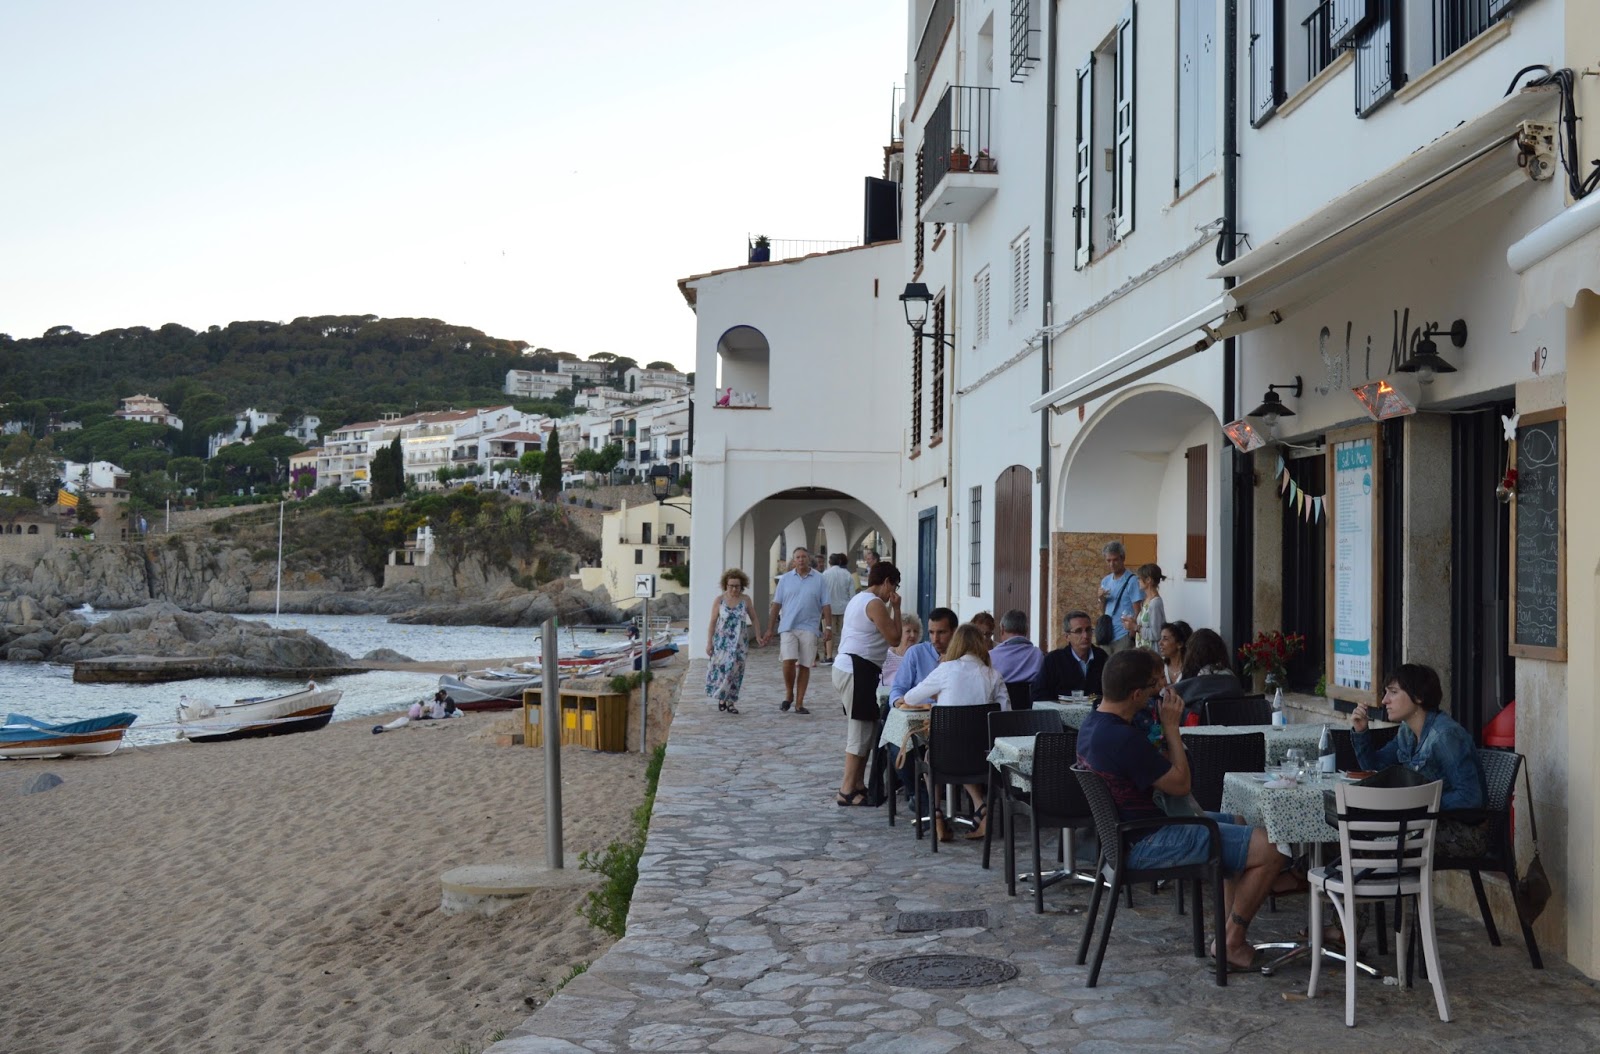 The beautiful coastal town of Calella de Palafrugell